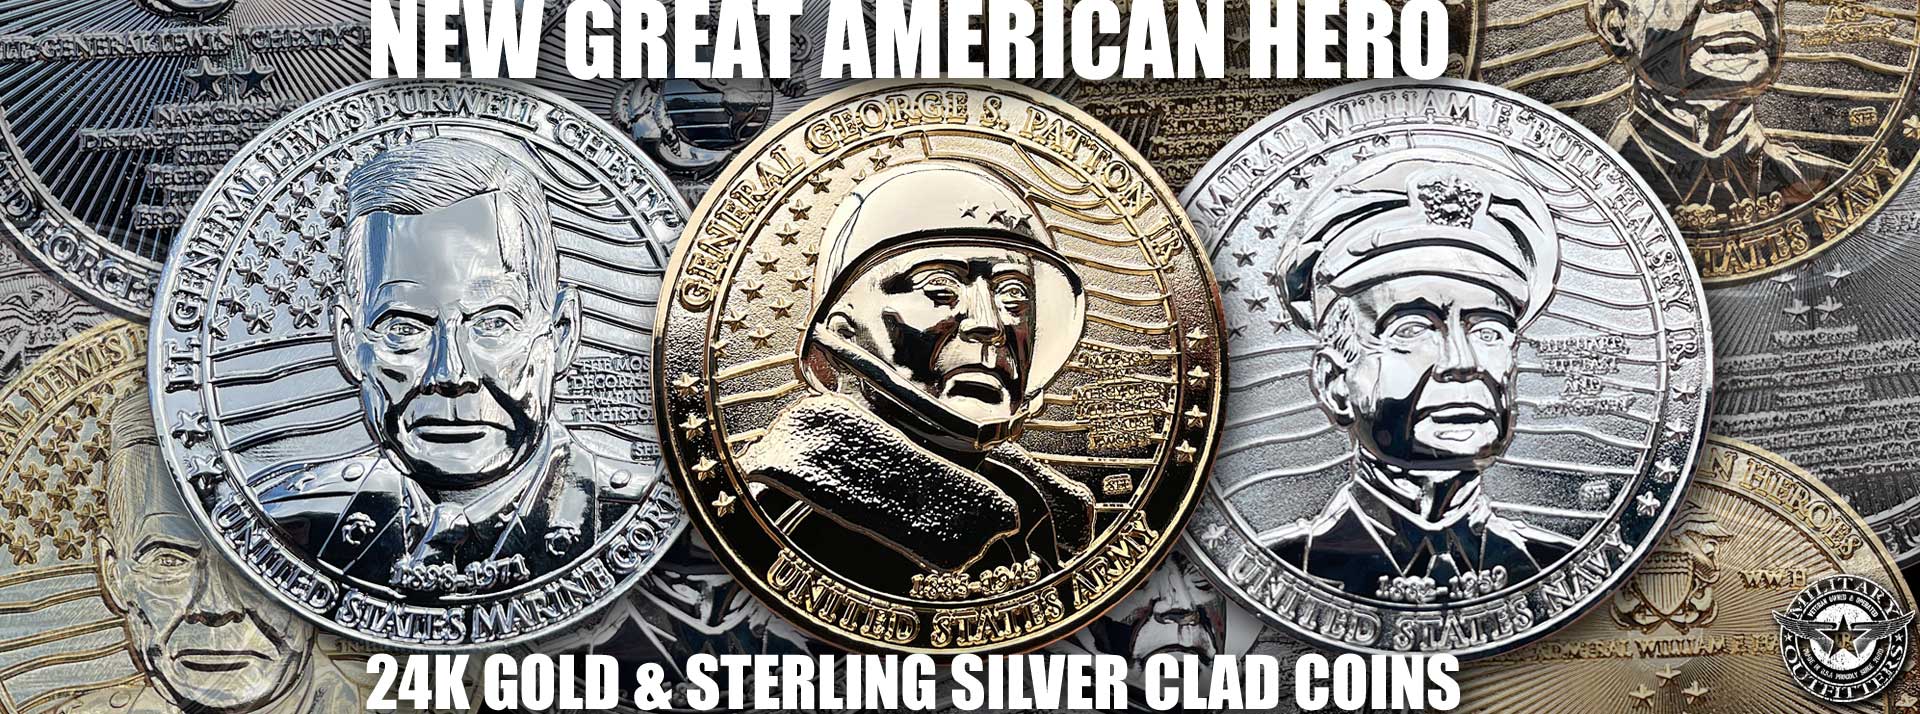 Great American Hero Coins